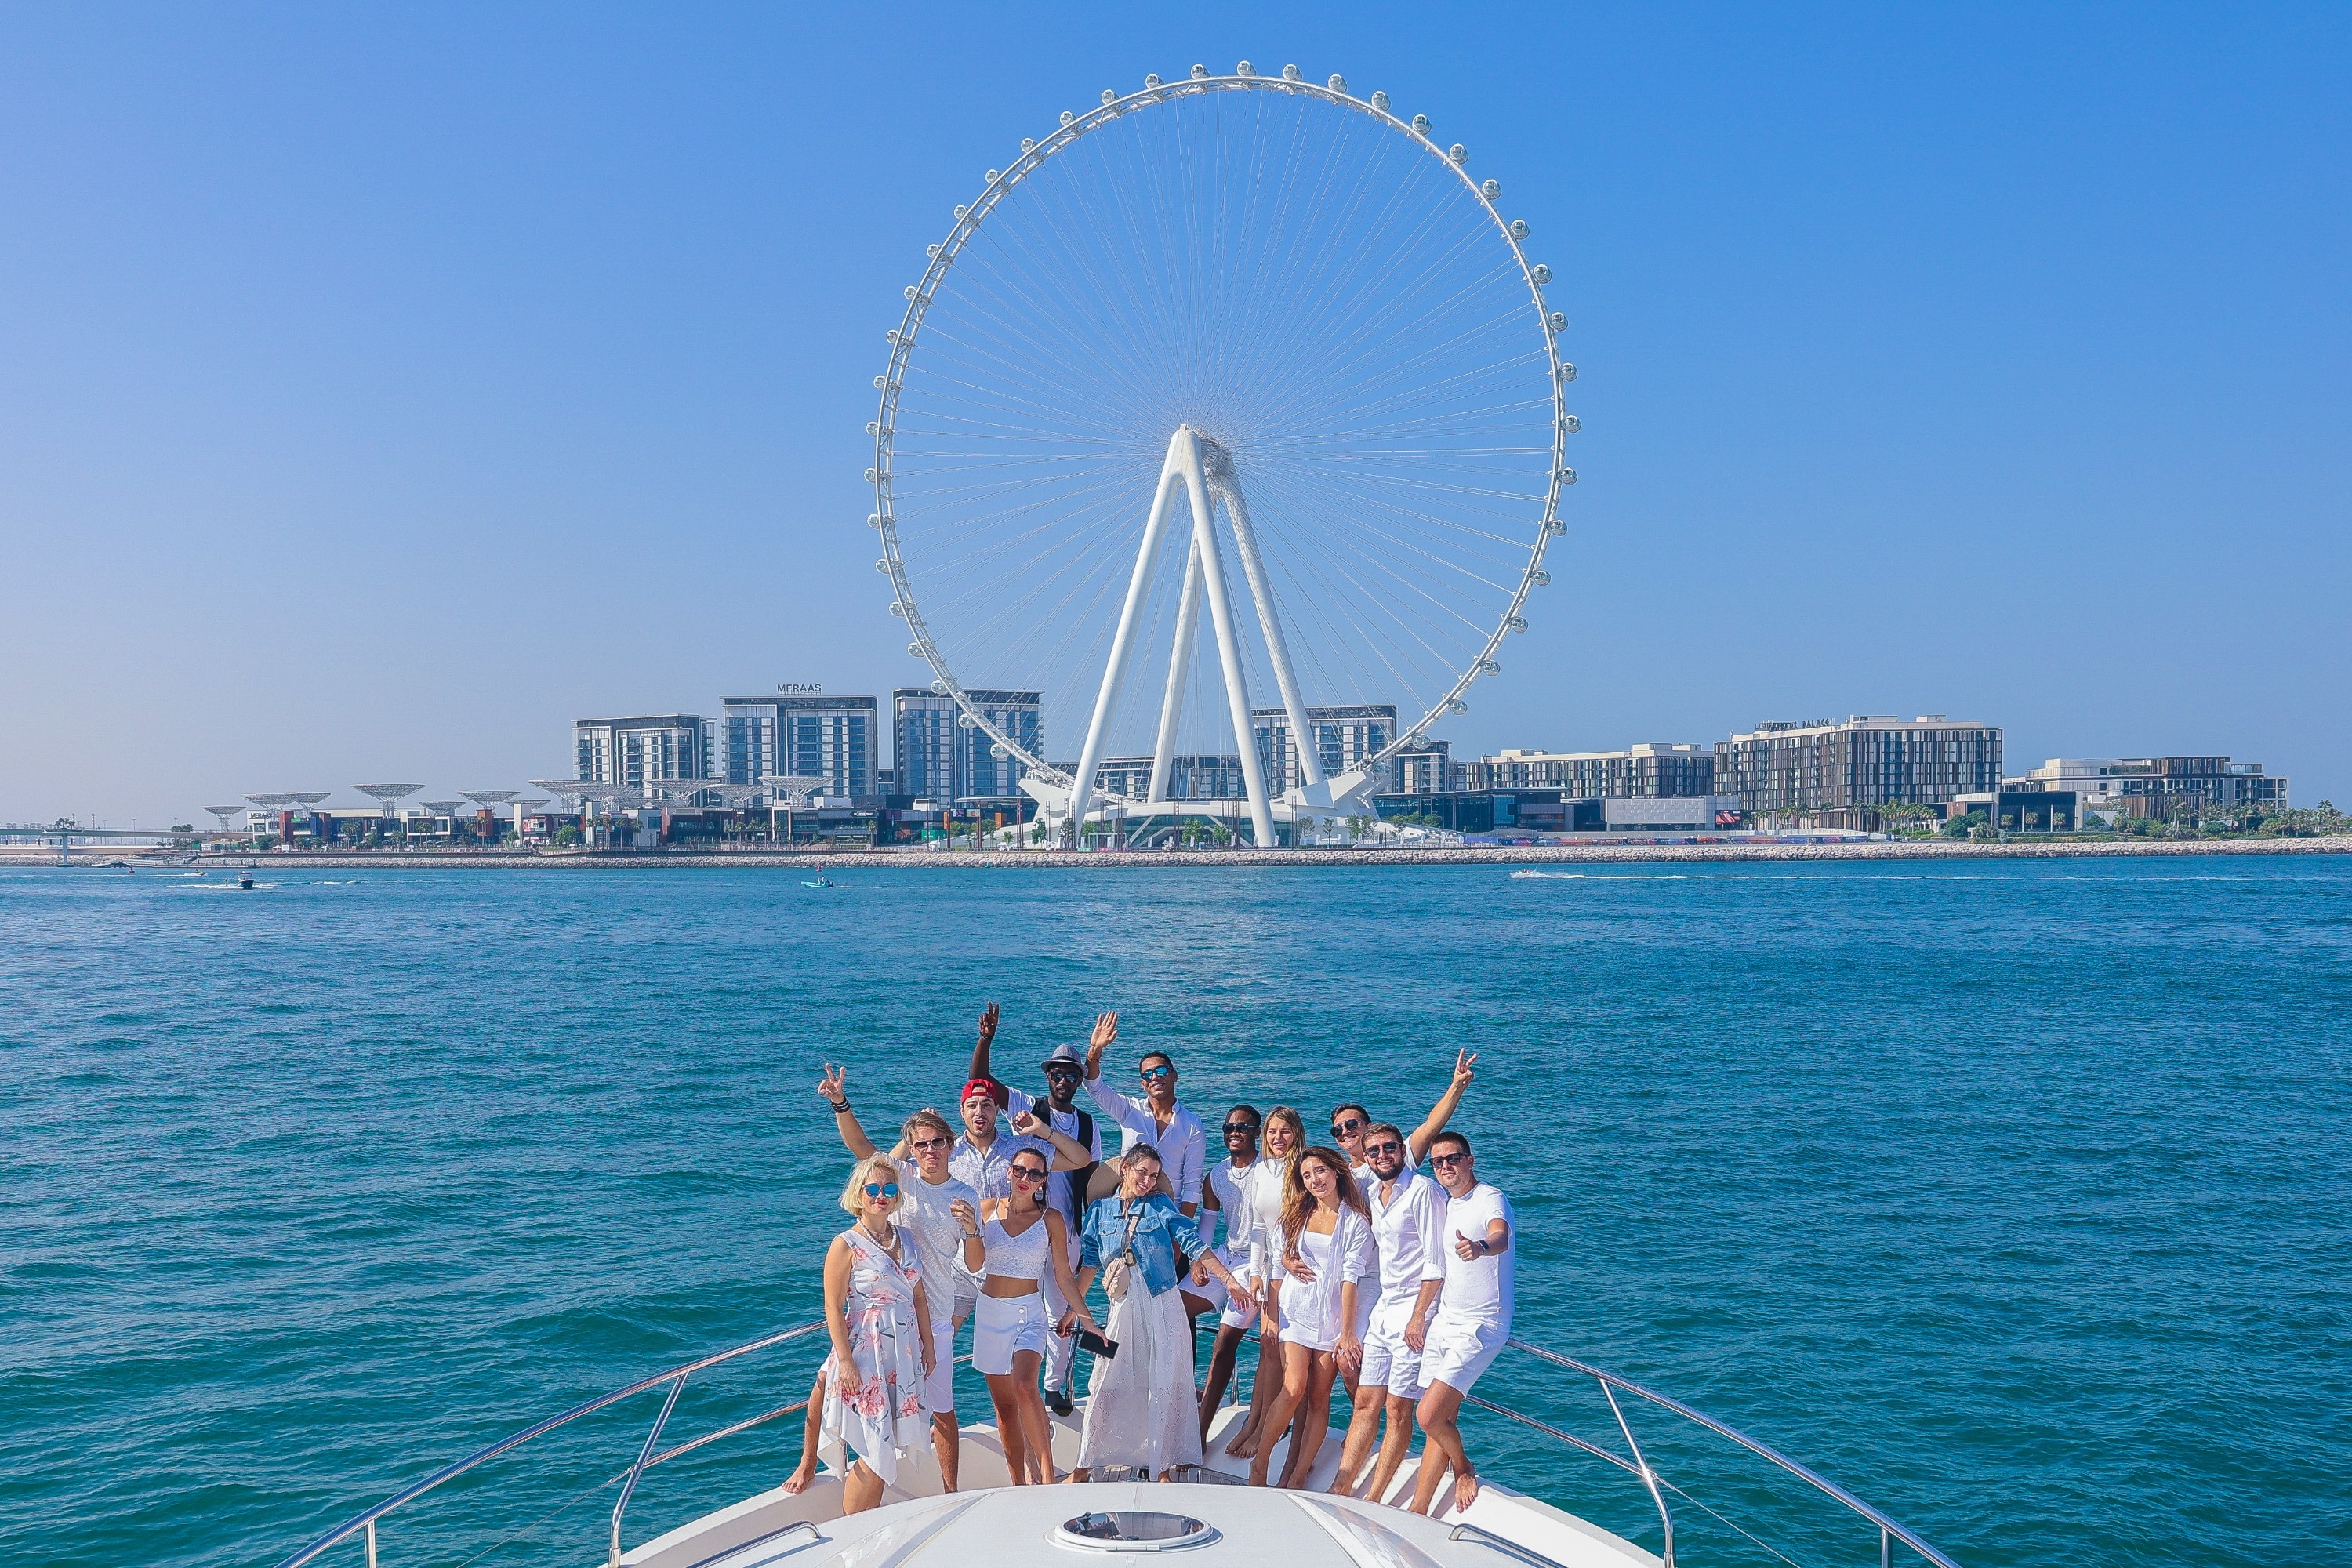 The Dubai Luxury Yacht Tour with BBQ in Dubai